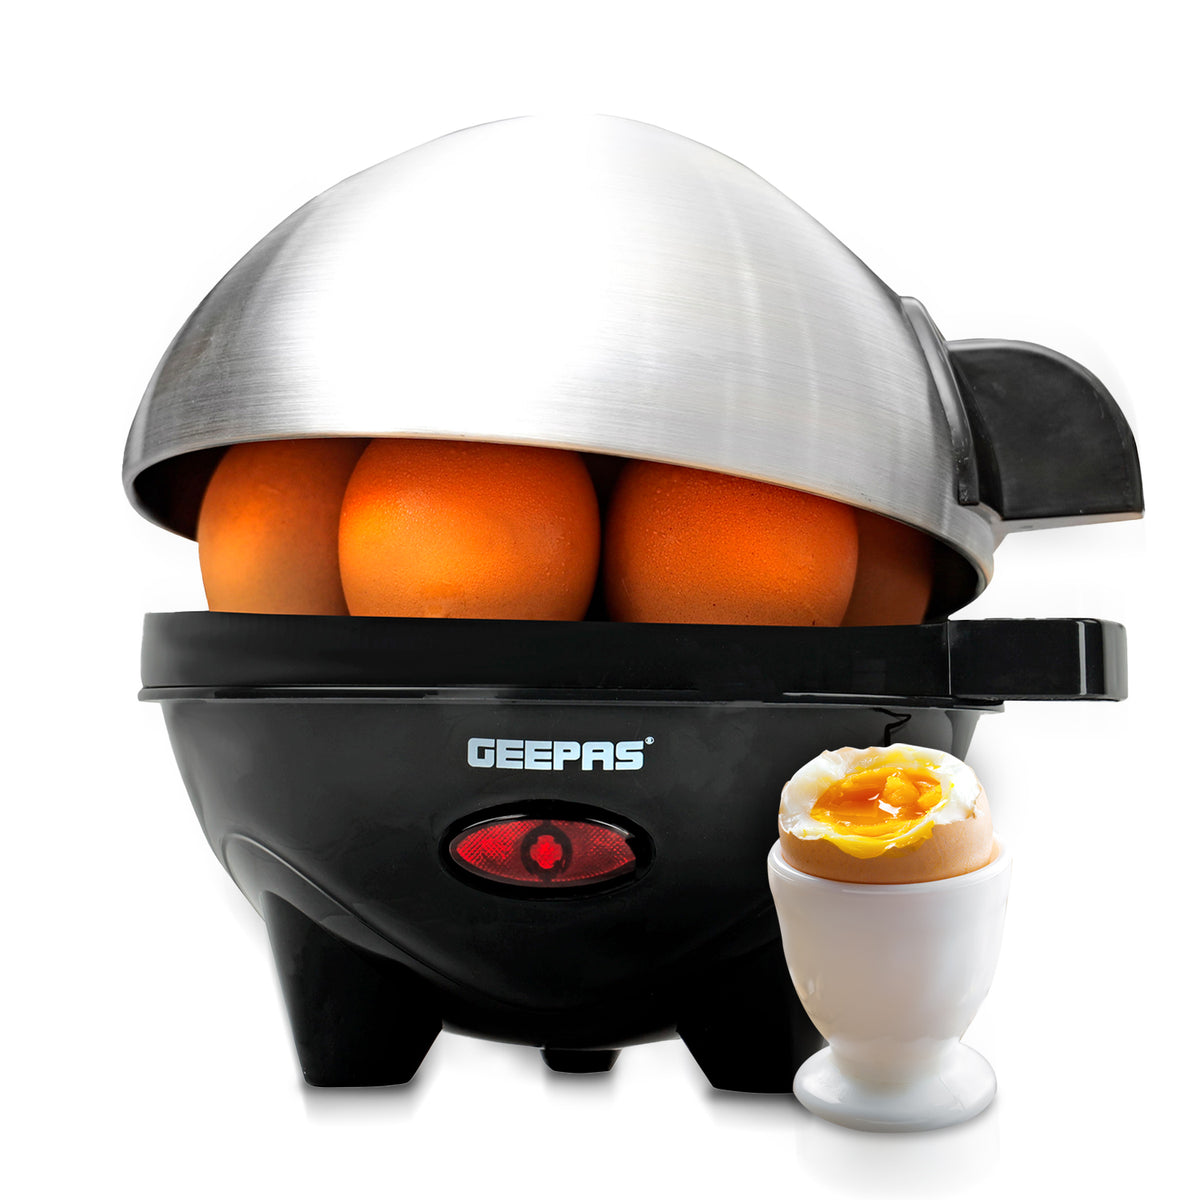 Geepas | For you. For life. Hard Boiled Egg Cooker & Poacher Cooker